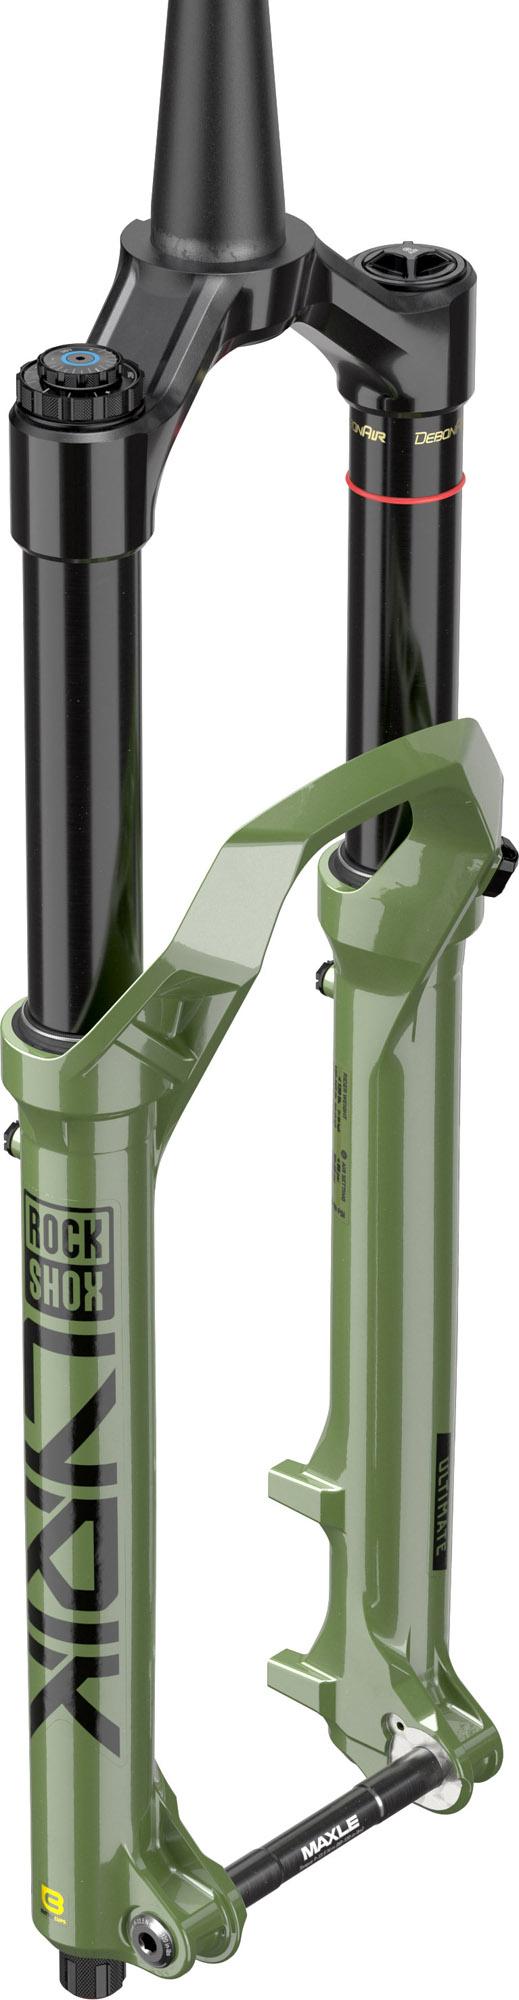 Rockshox Lyrik Ultimate Charger 3 Rc2 Fork - Green